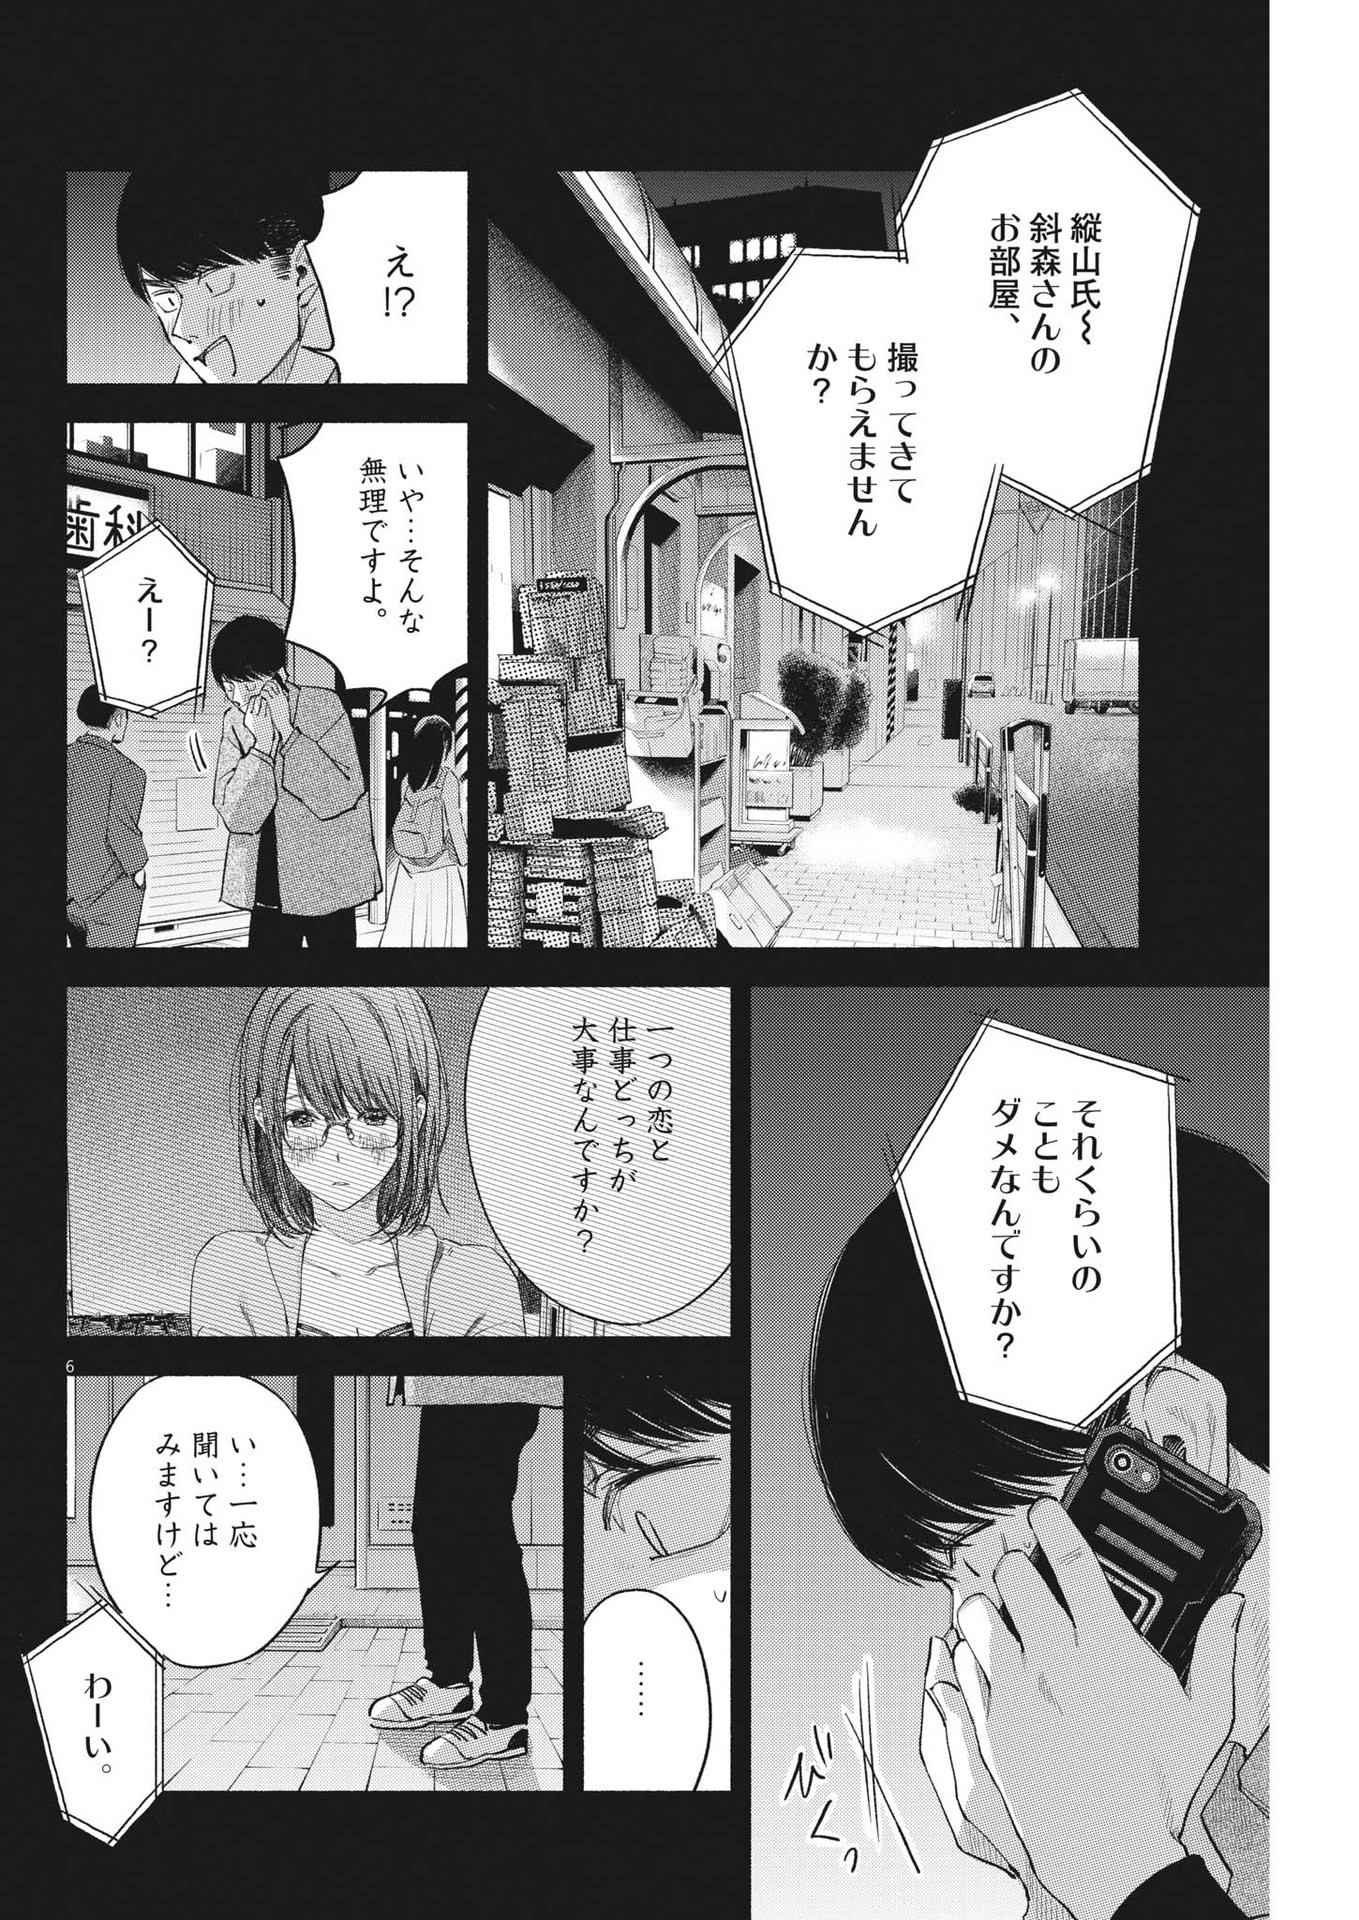 Henshuu no Isshou - Chapter 14 - Page 6